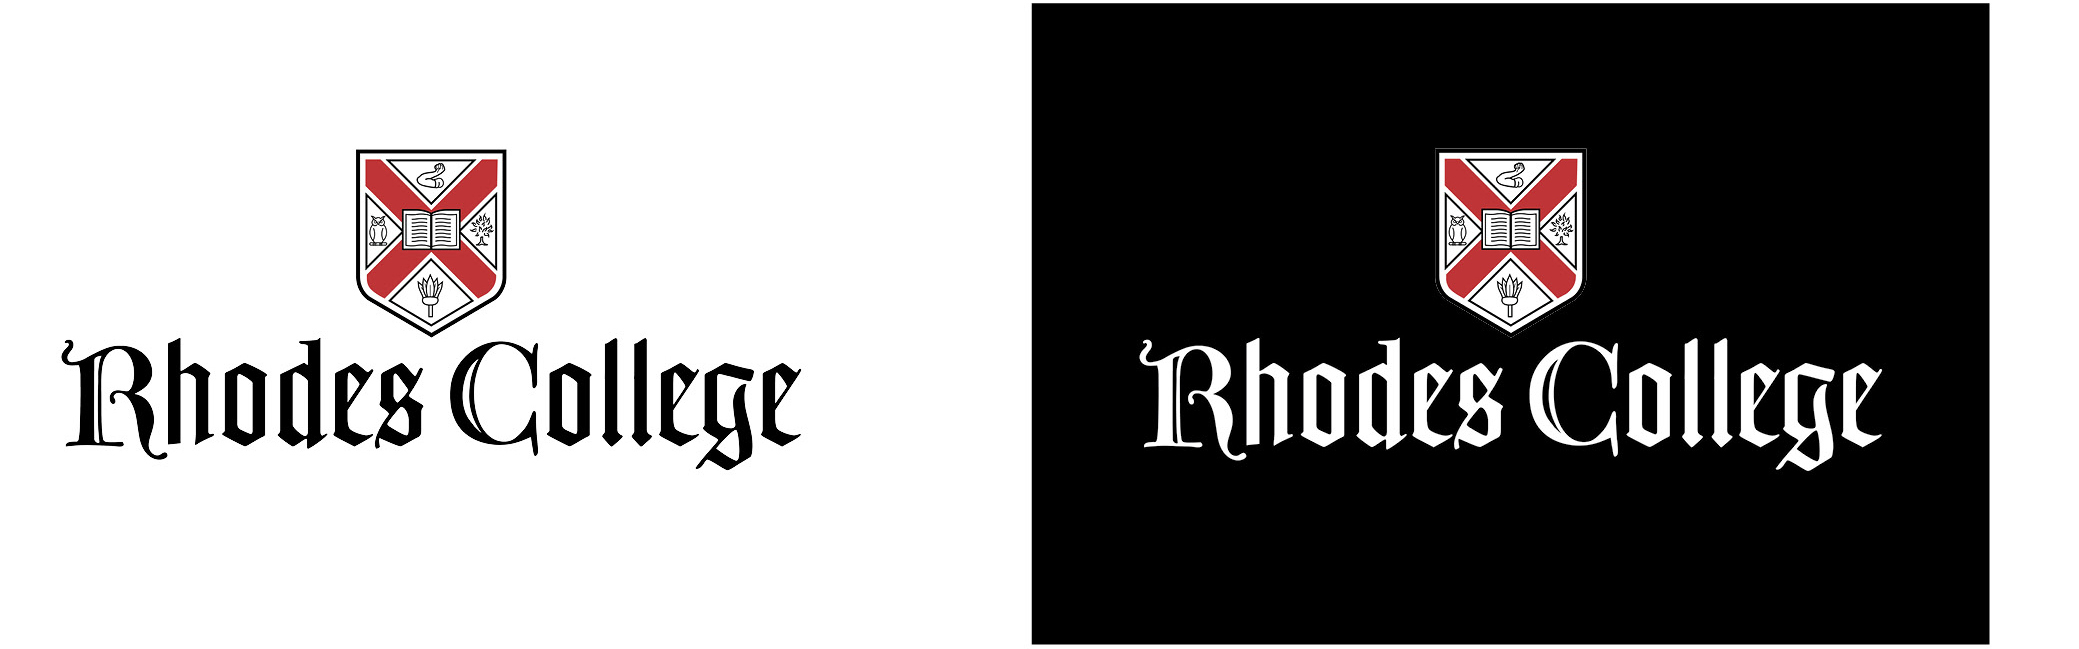 a representation of the Rhodes College logo